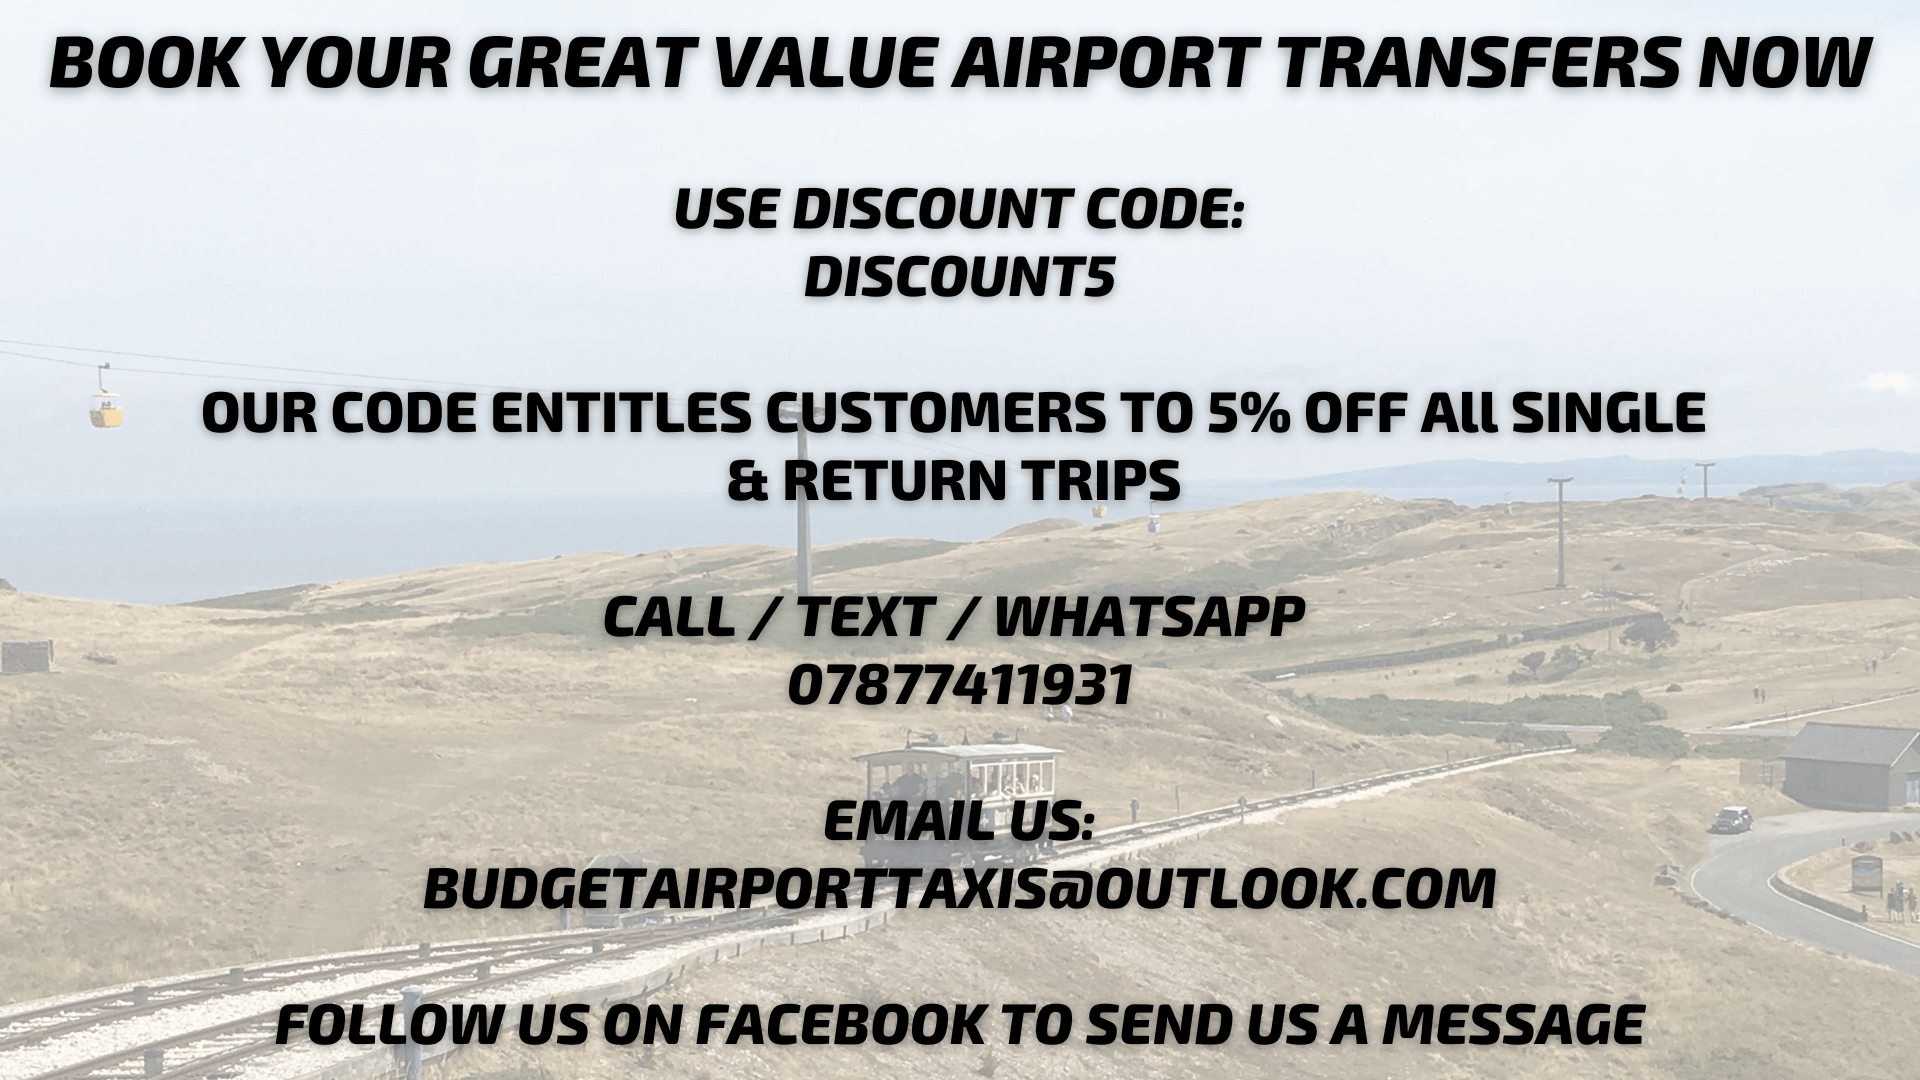 girvan airport taxi transfer 5% discount